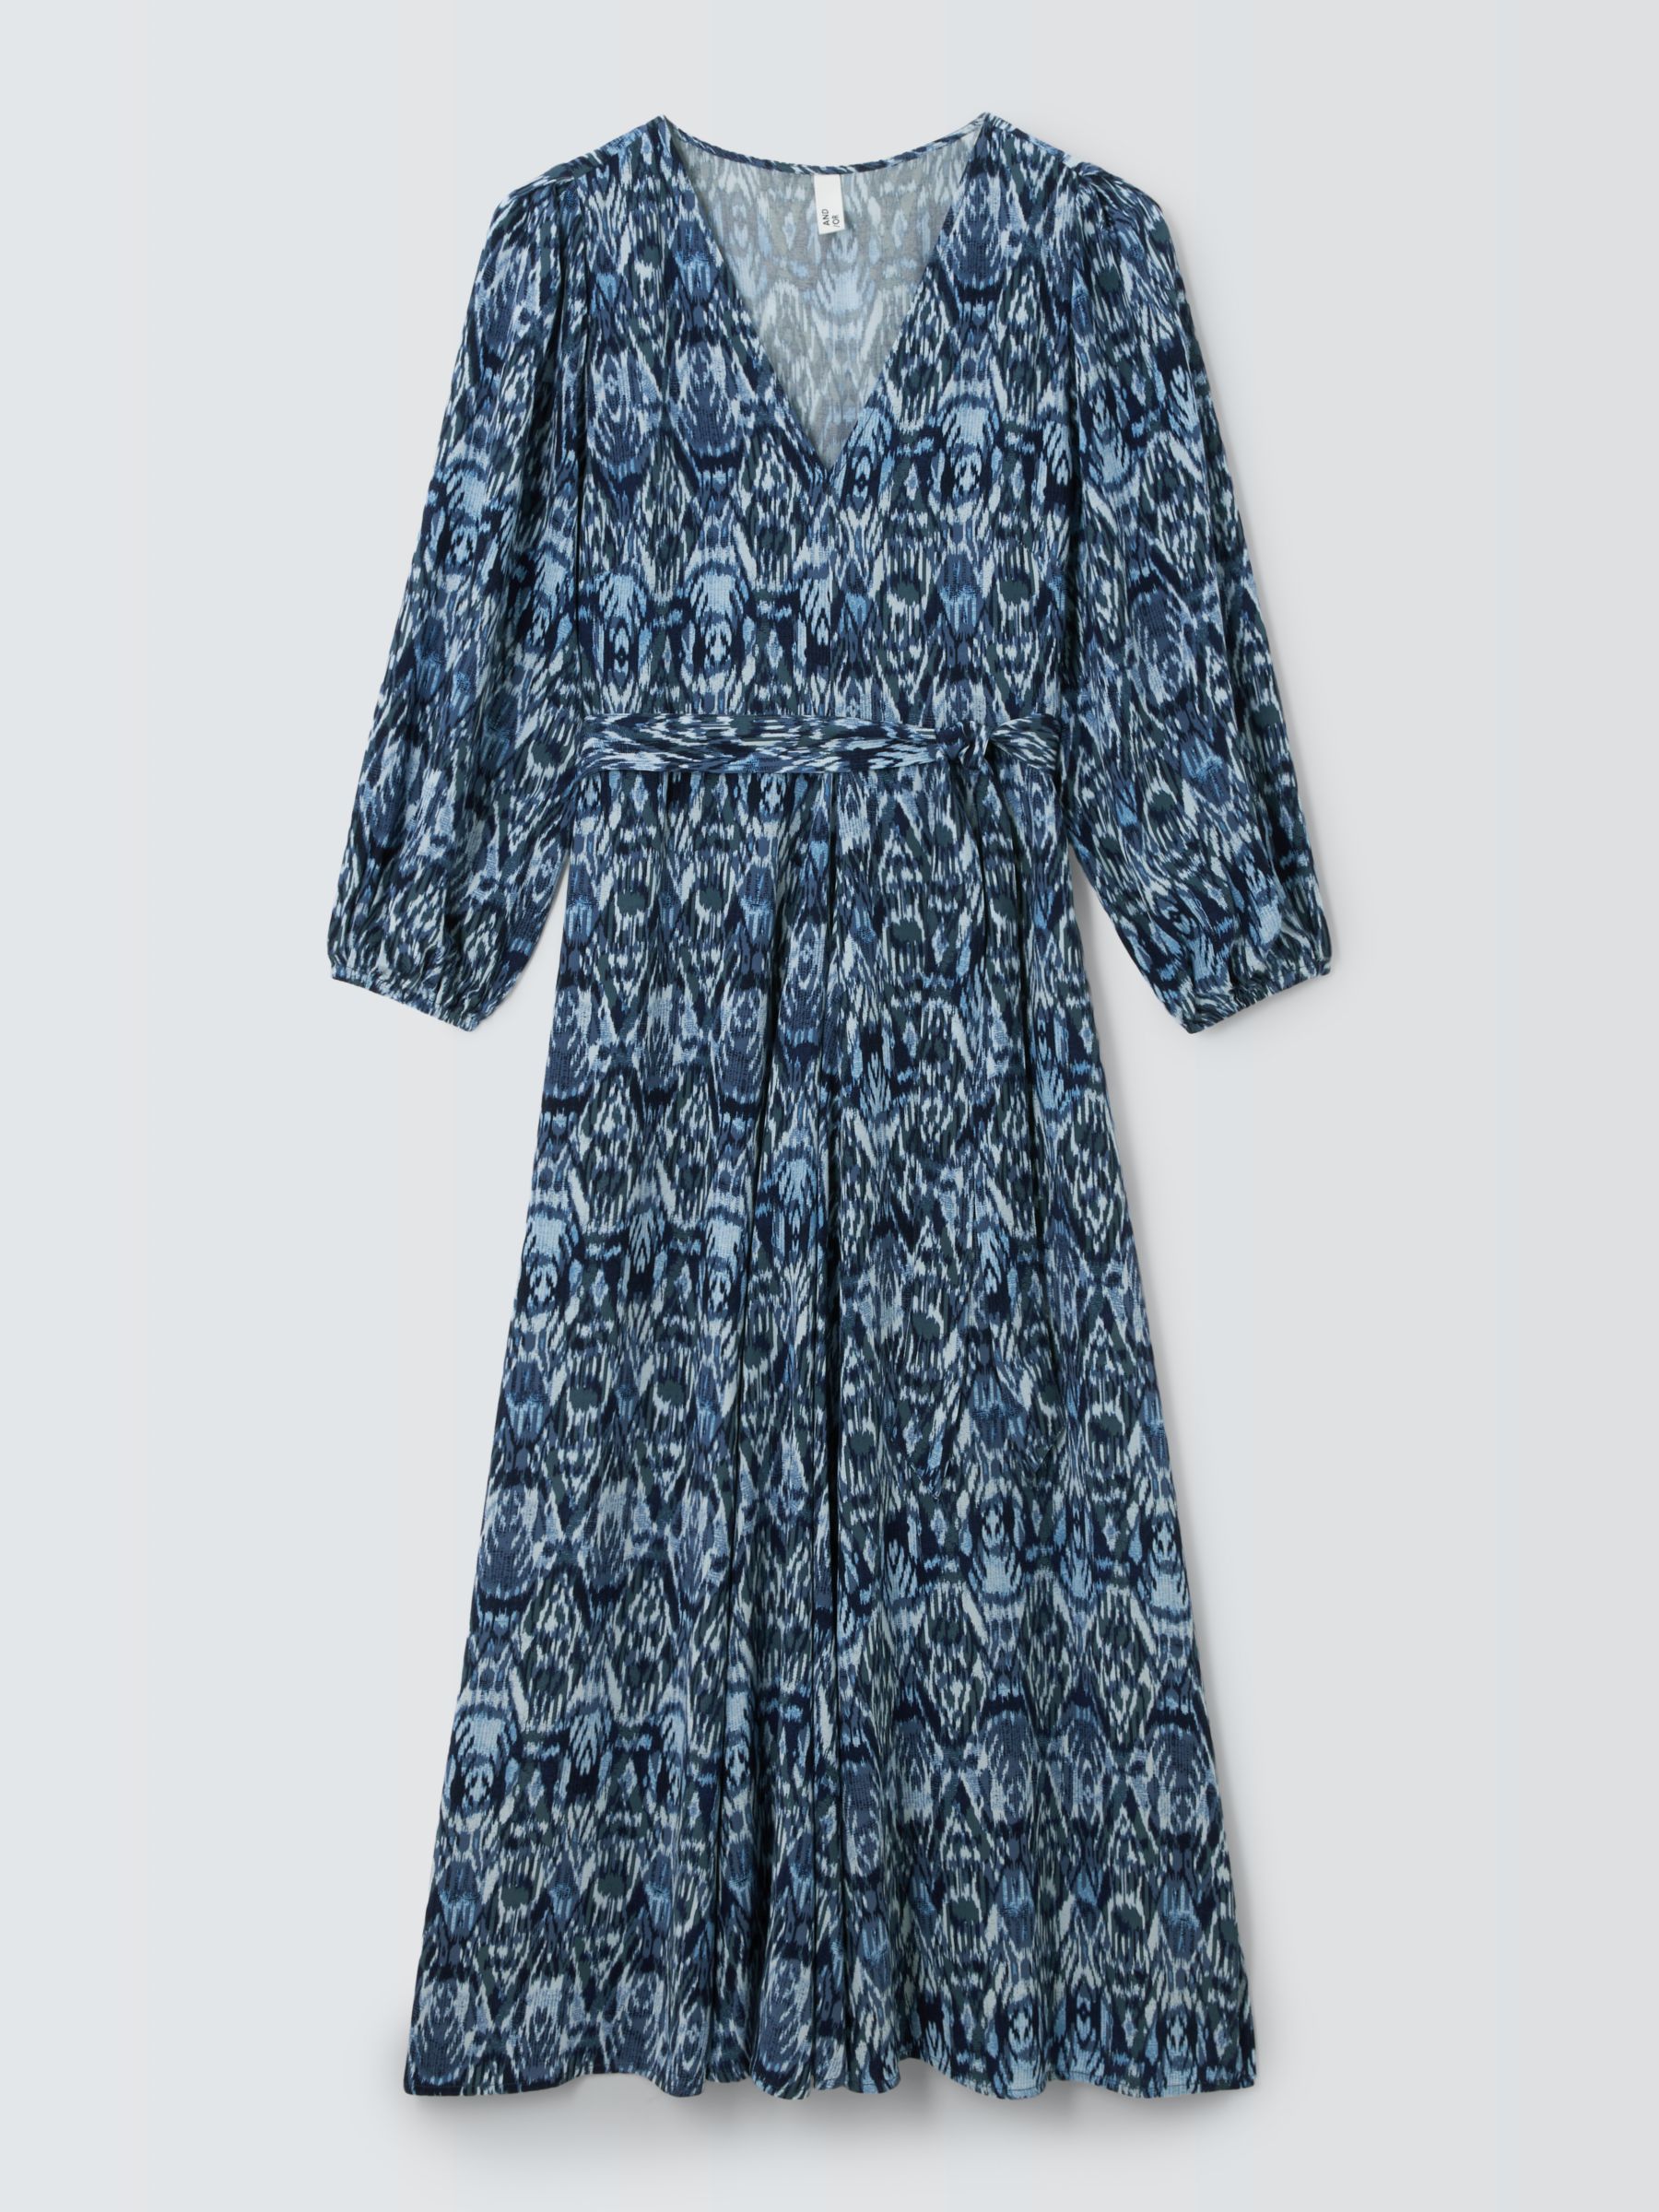 AND/OR Layla Ikat Midi Dress, Blue, 12